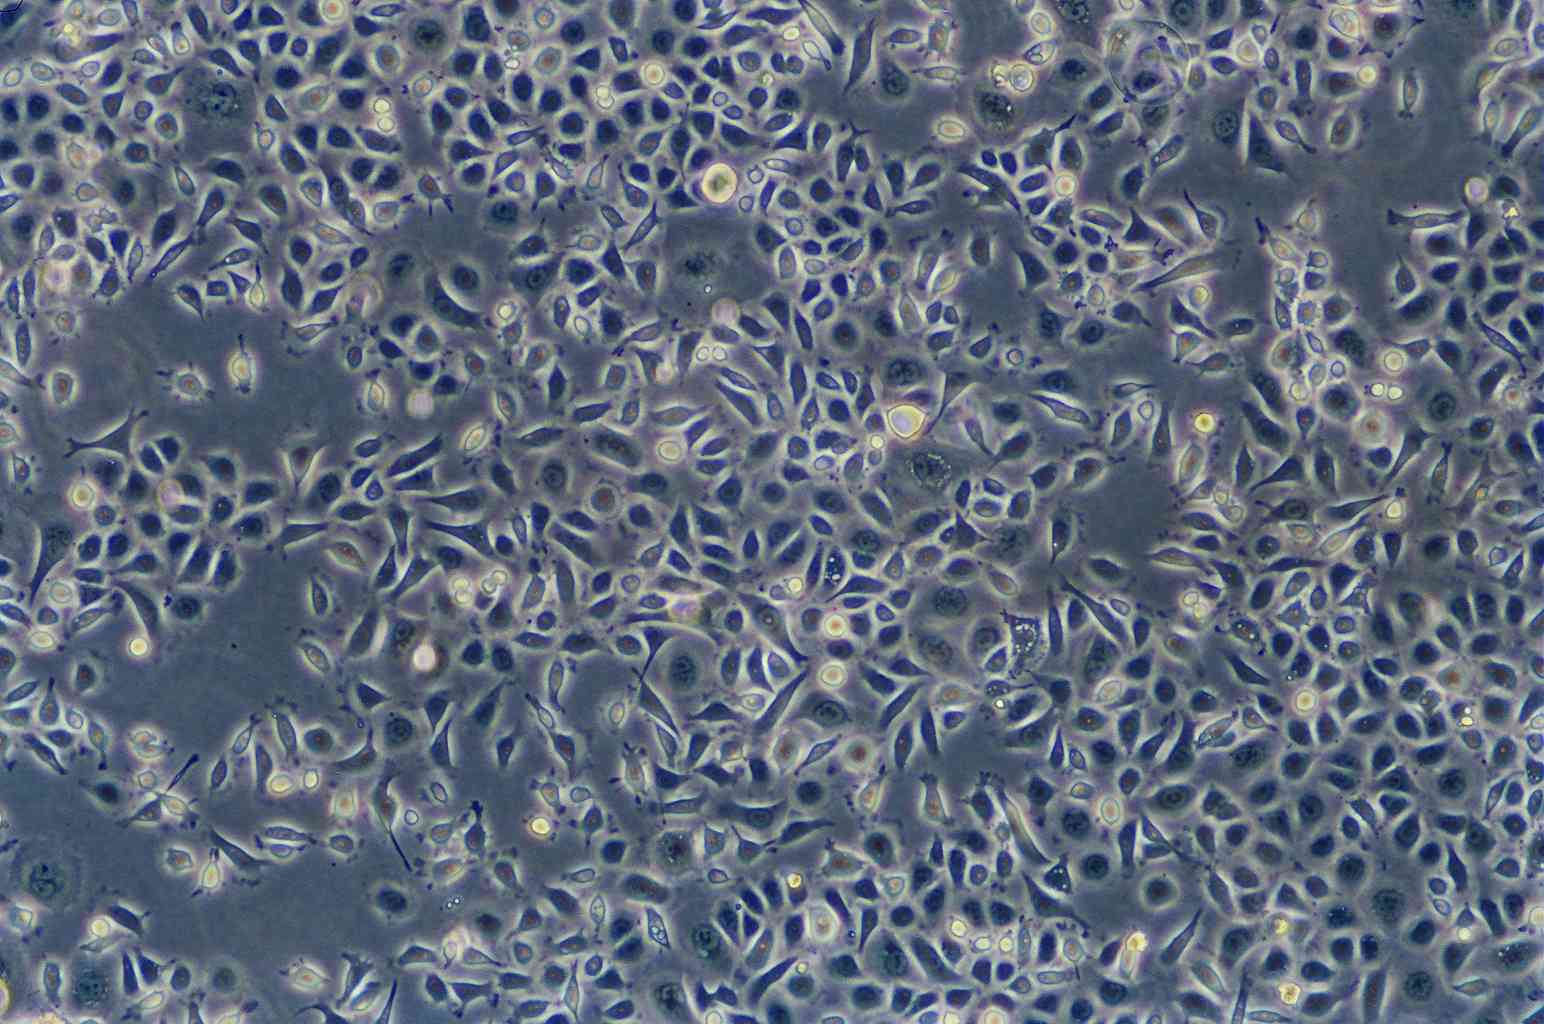 SCL-II Cells|人皮肤鳞癌细胞系,SCL-II Cells